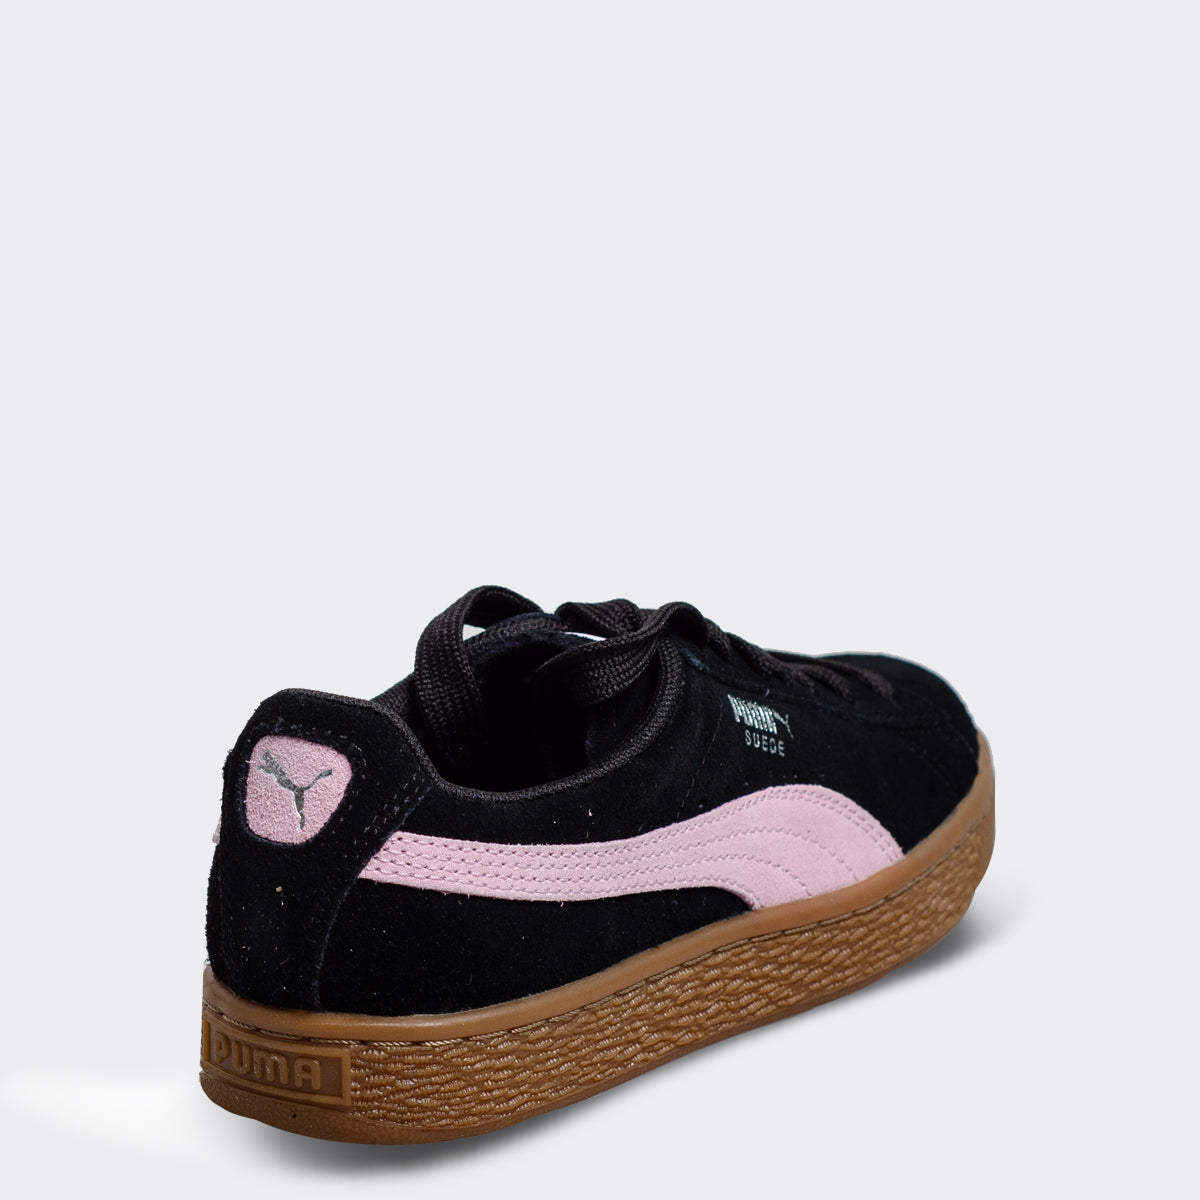 PUMA Suede Classic Sneakers Black Pink 